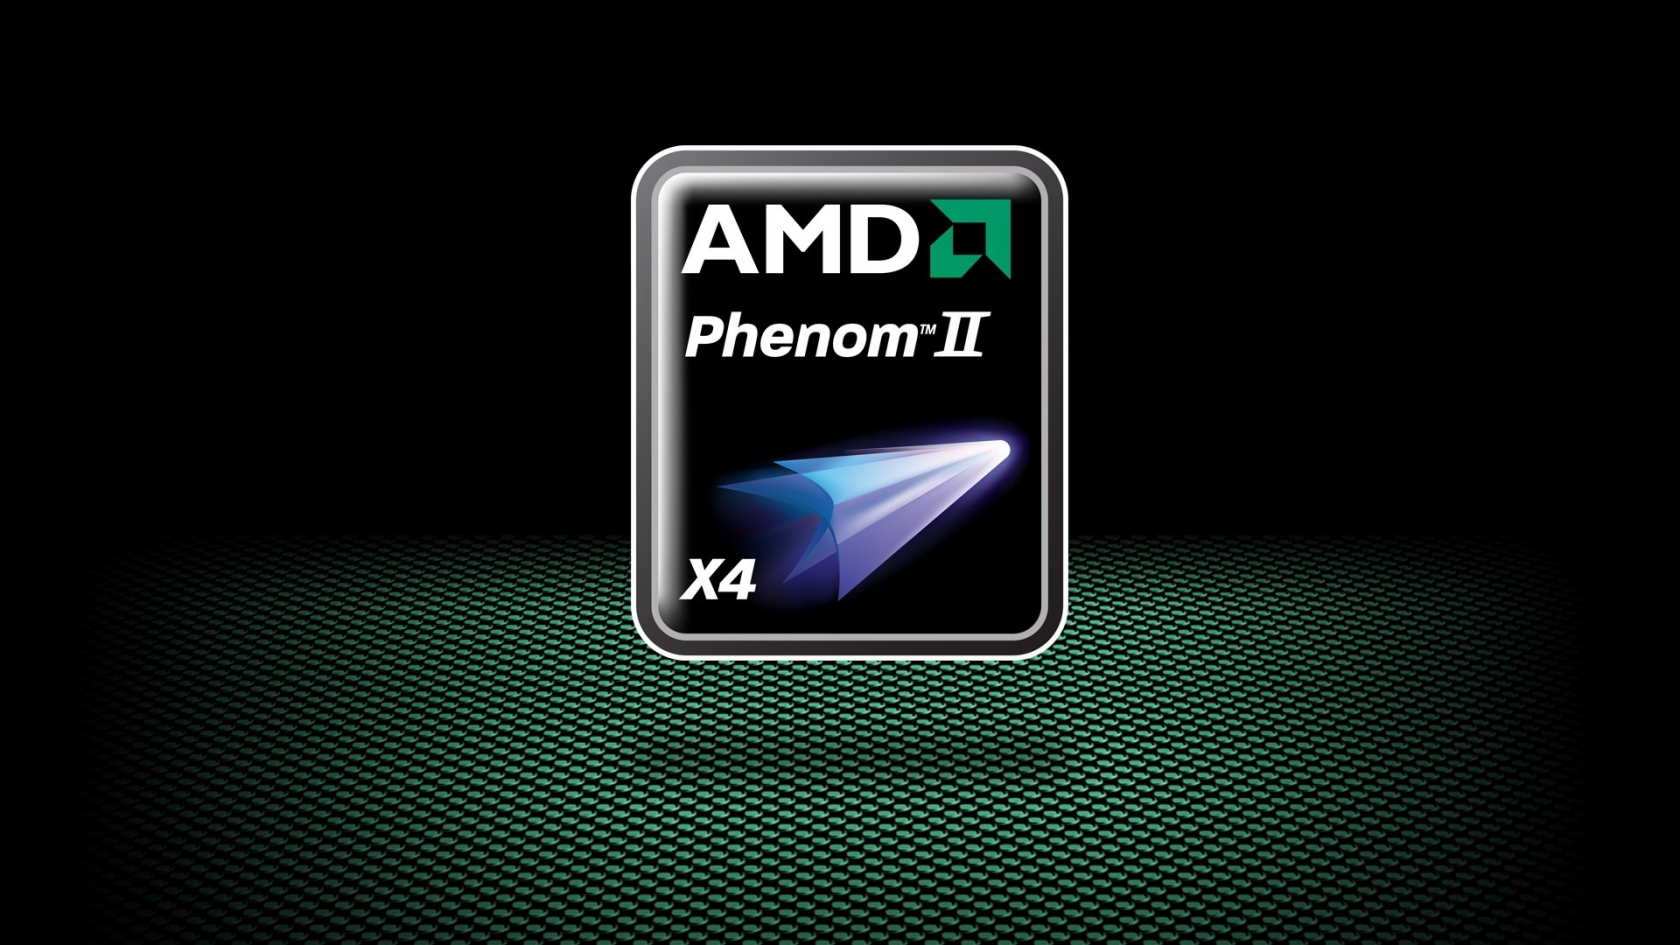 AMD Phenom II for 1680 x 945 HDTV resolution